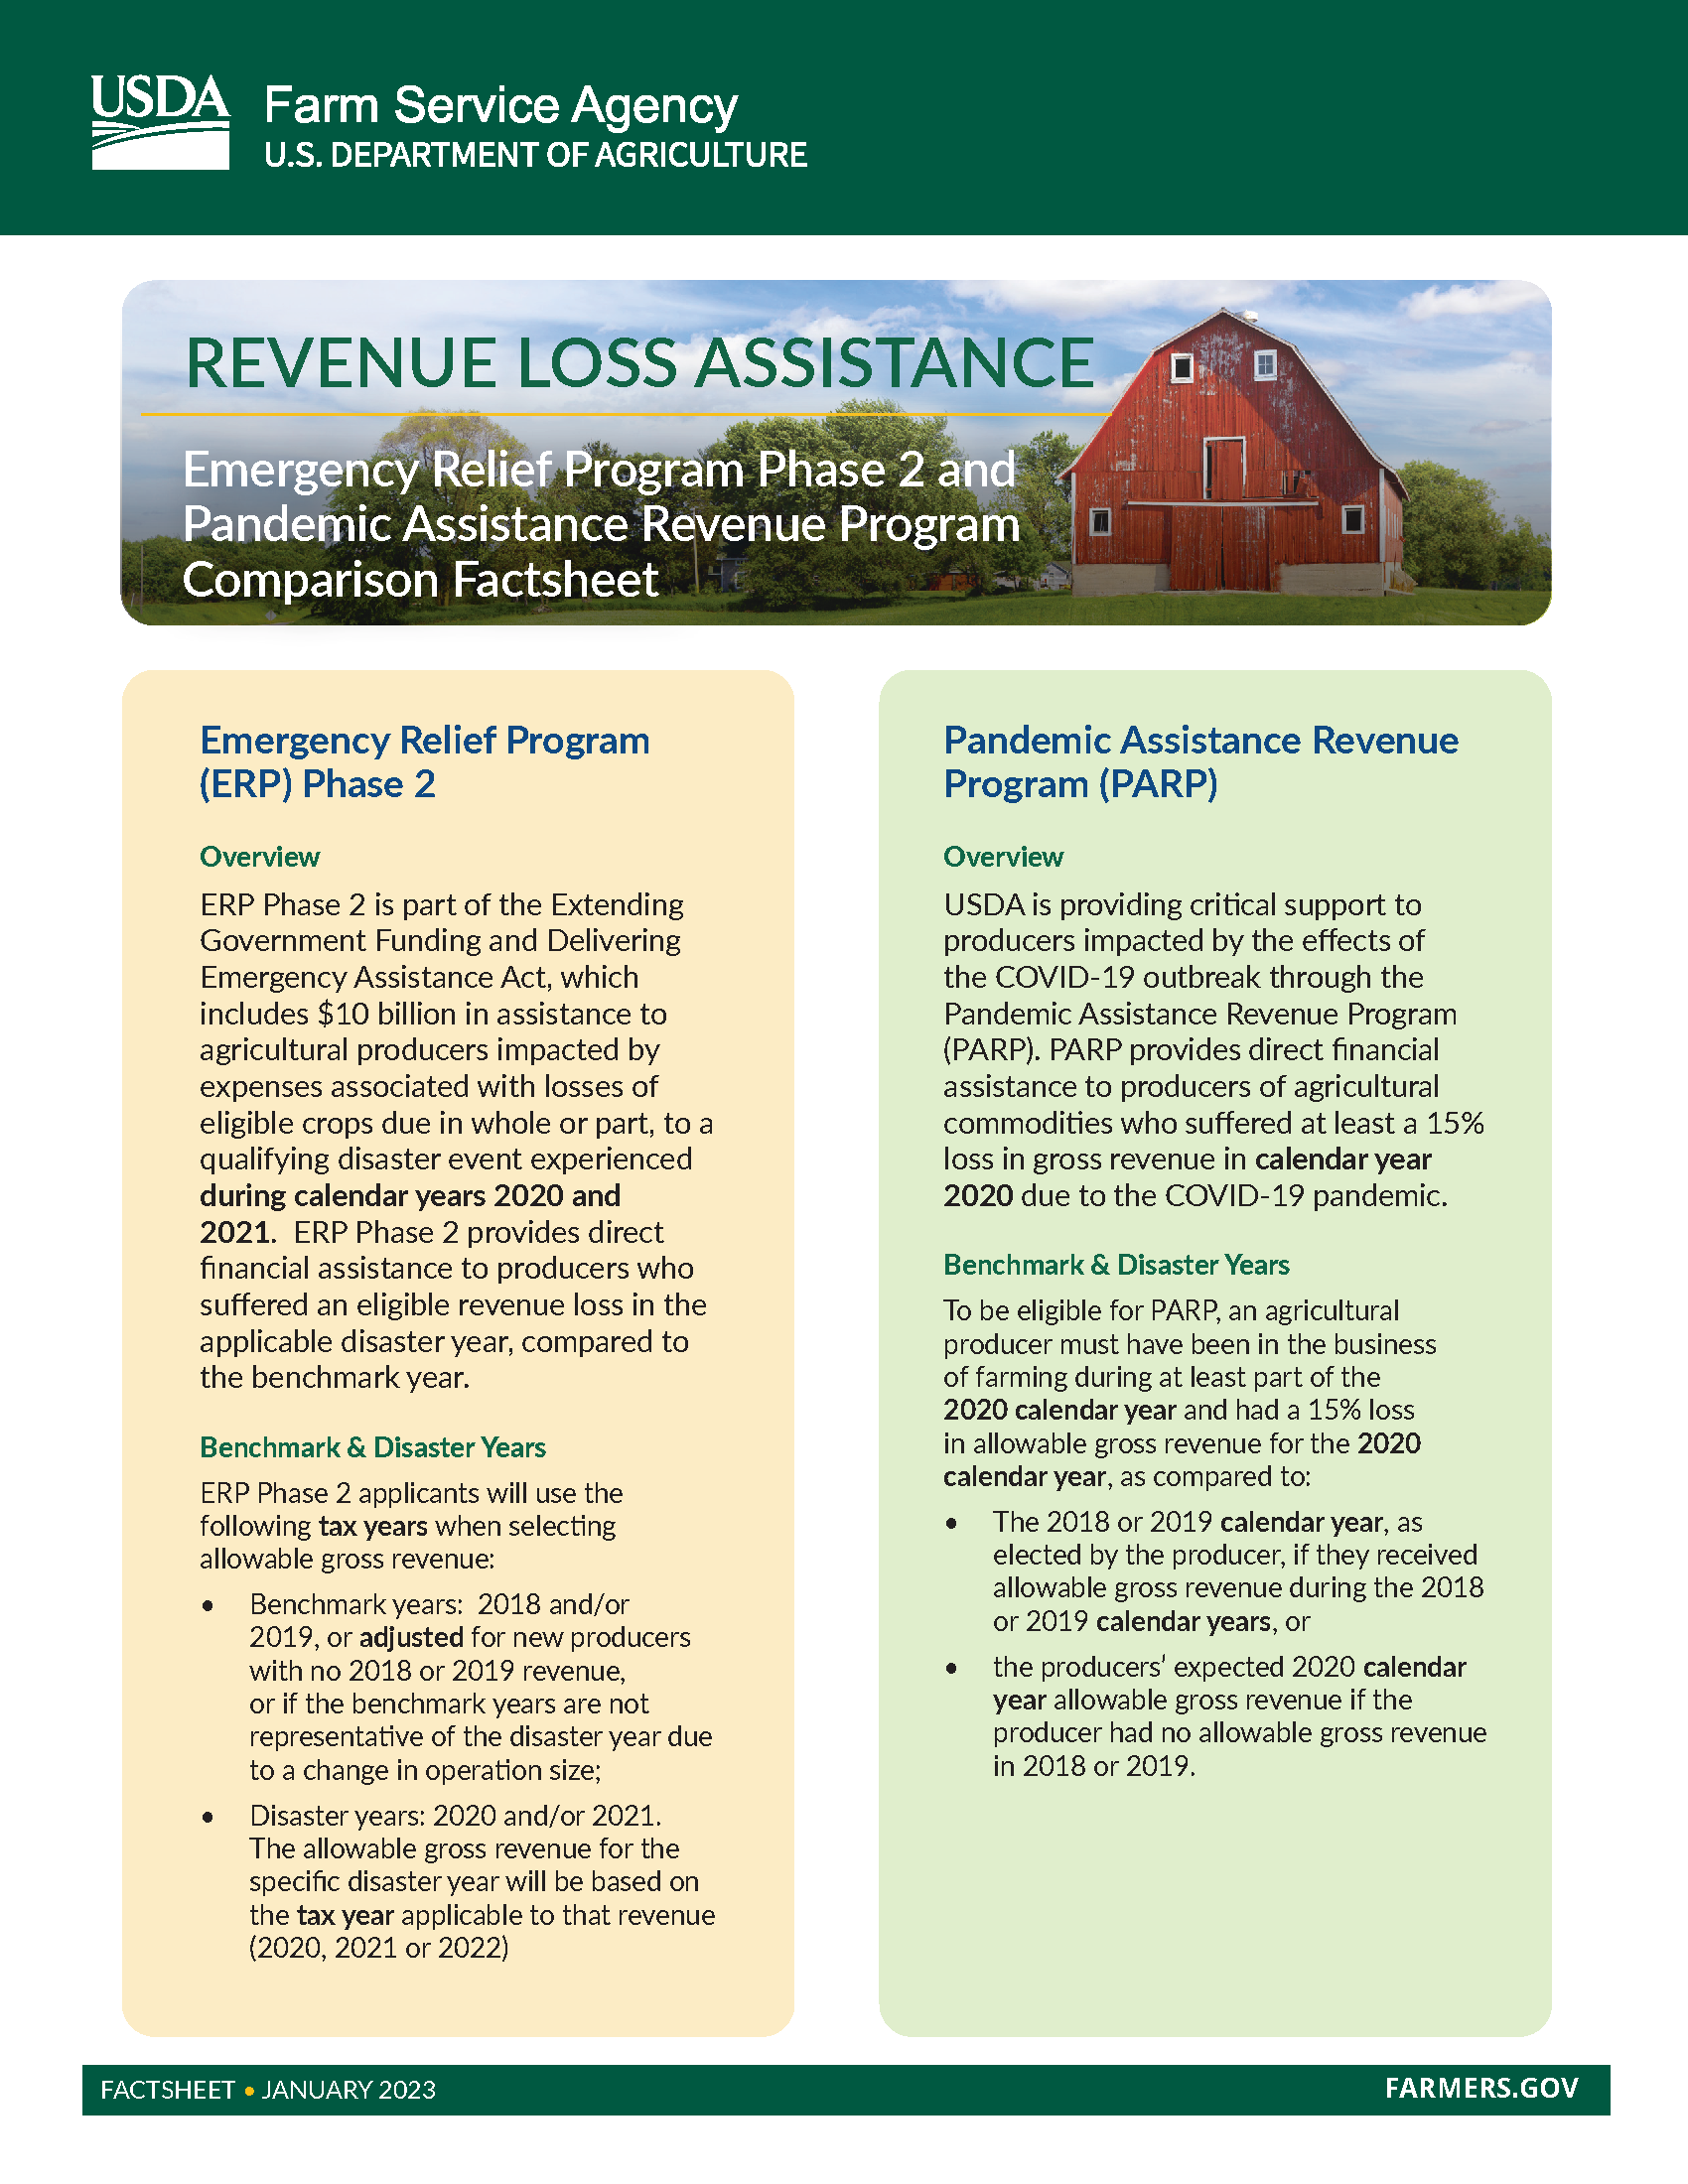 Farm Service Agency Revenue Loss Assistance Information Fact Sheet page 1